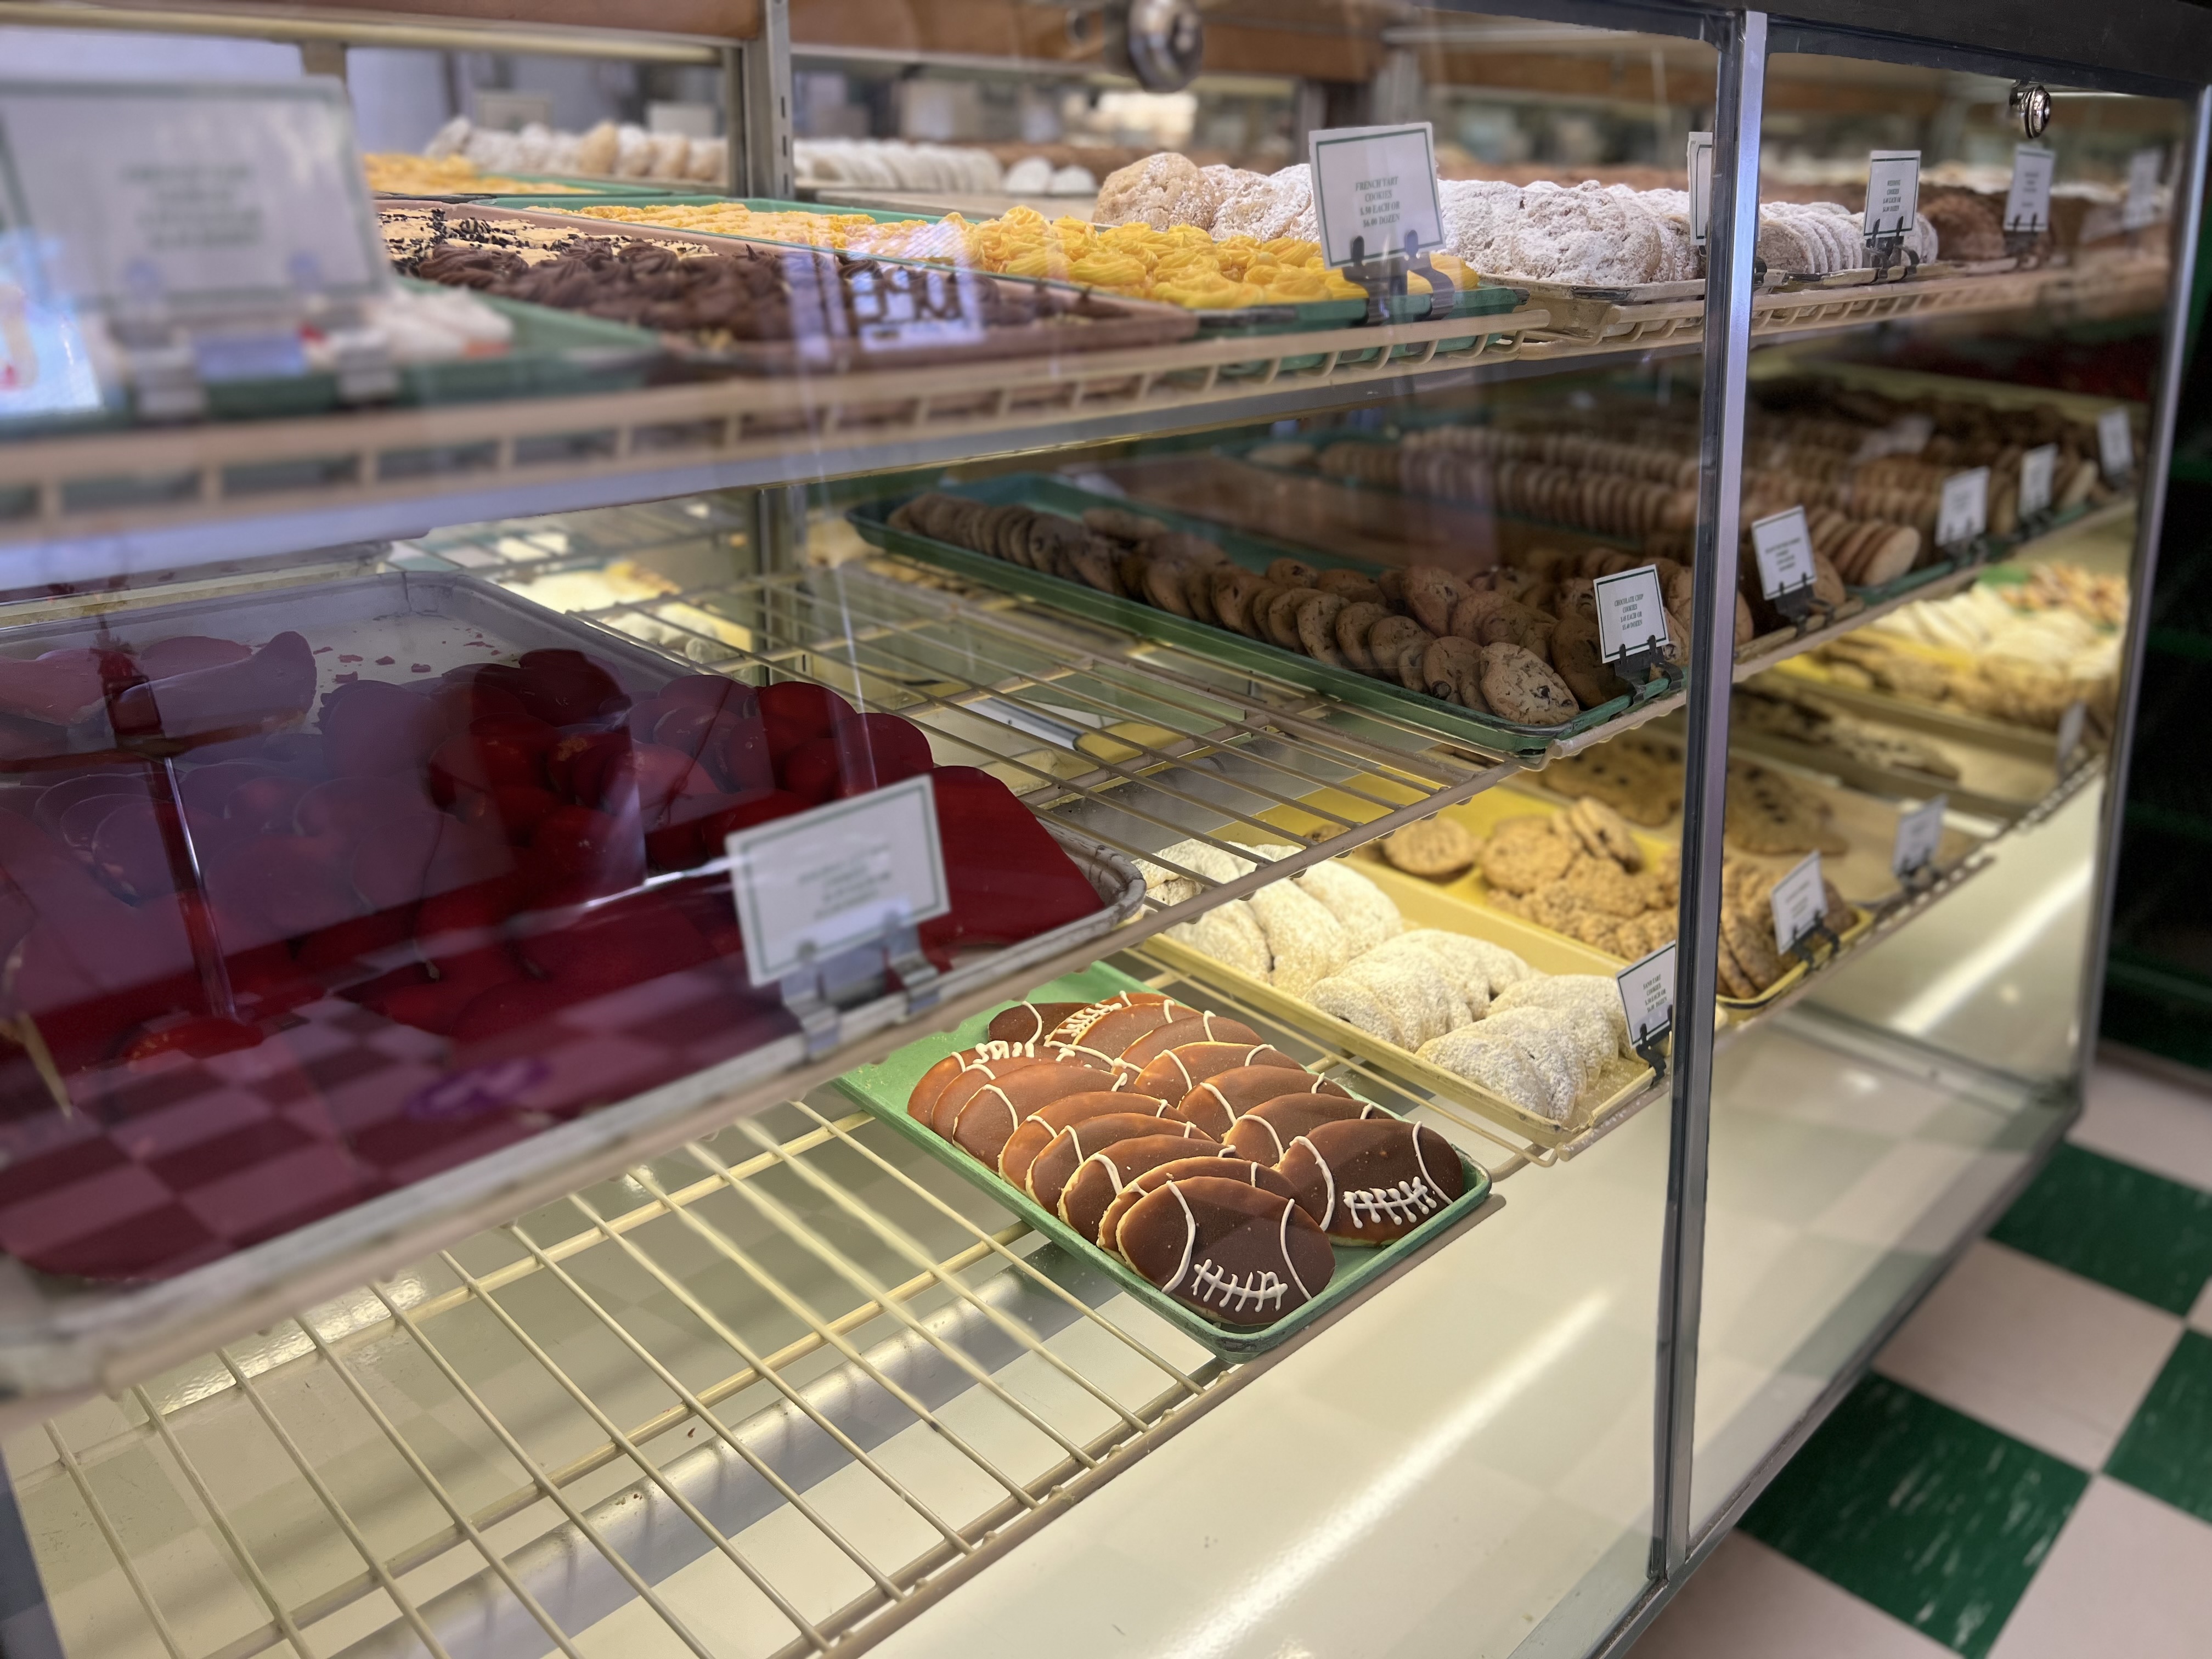 Freshly baked pie — Bakery in Albuquerque NM